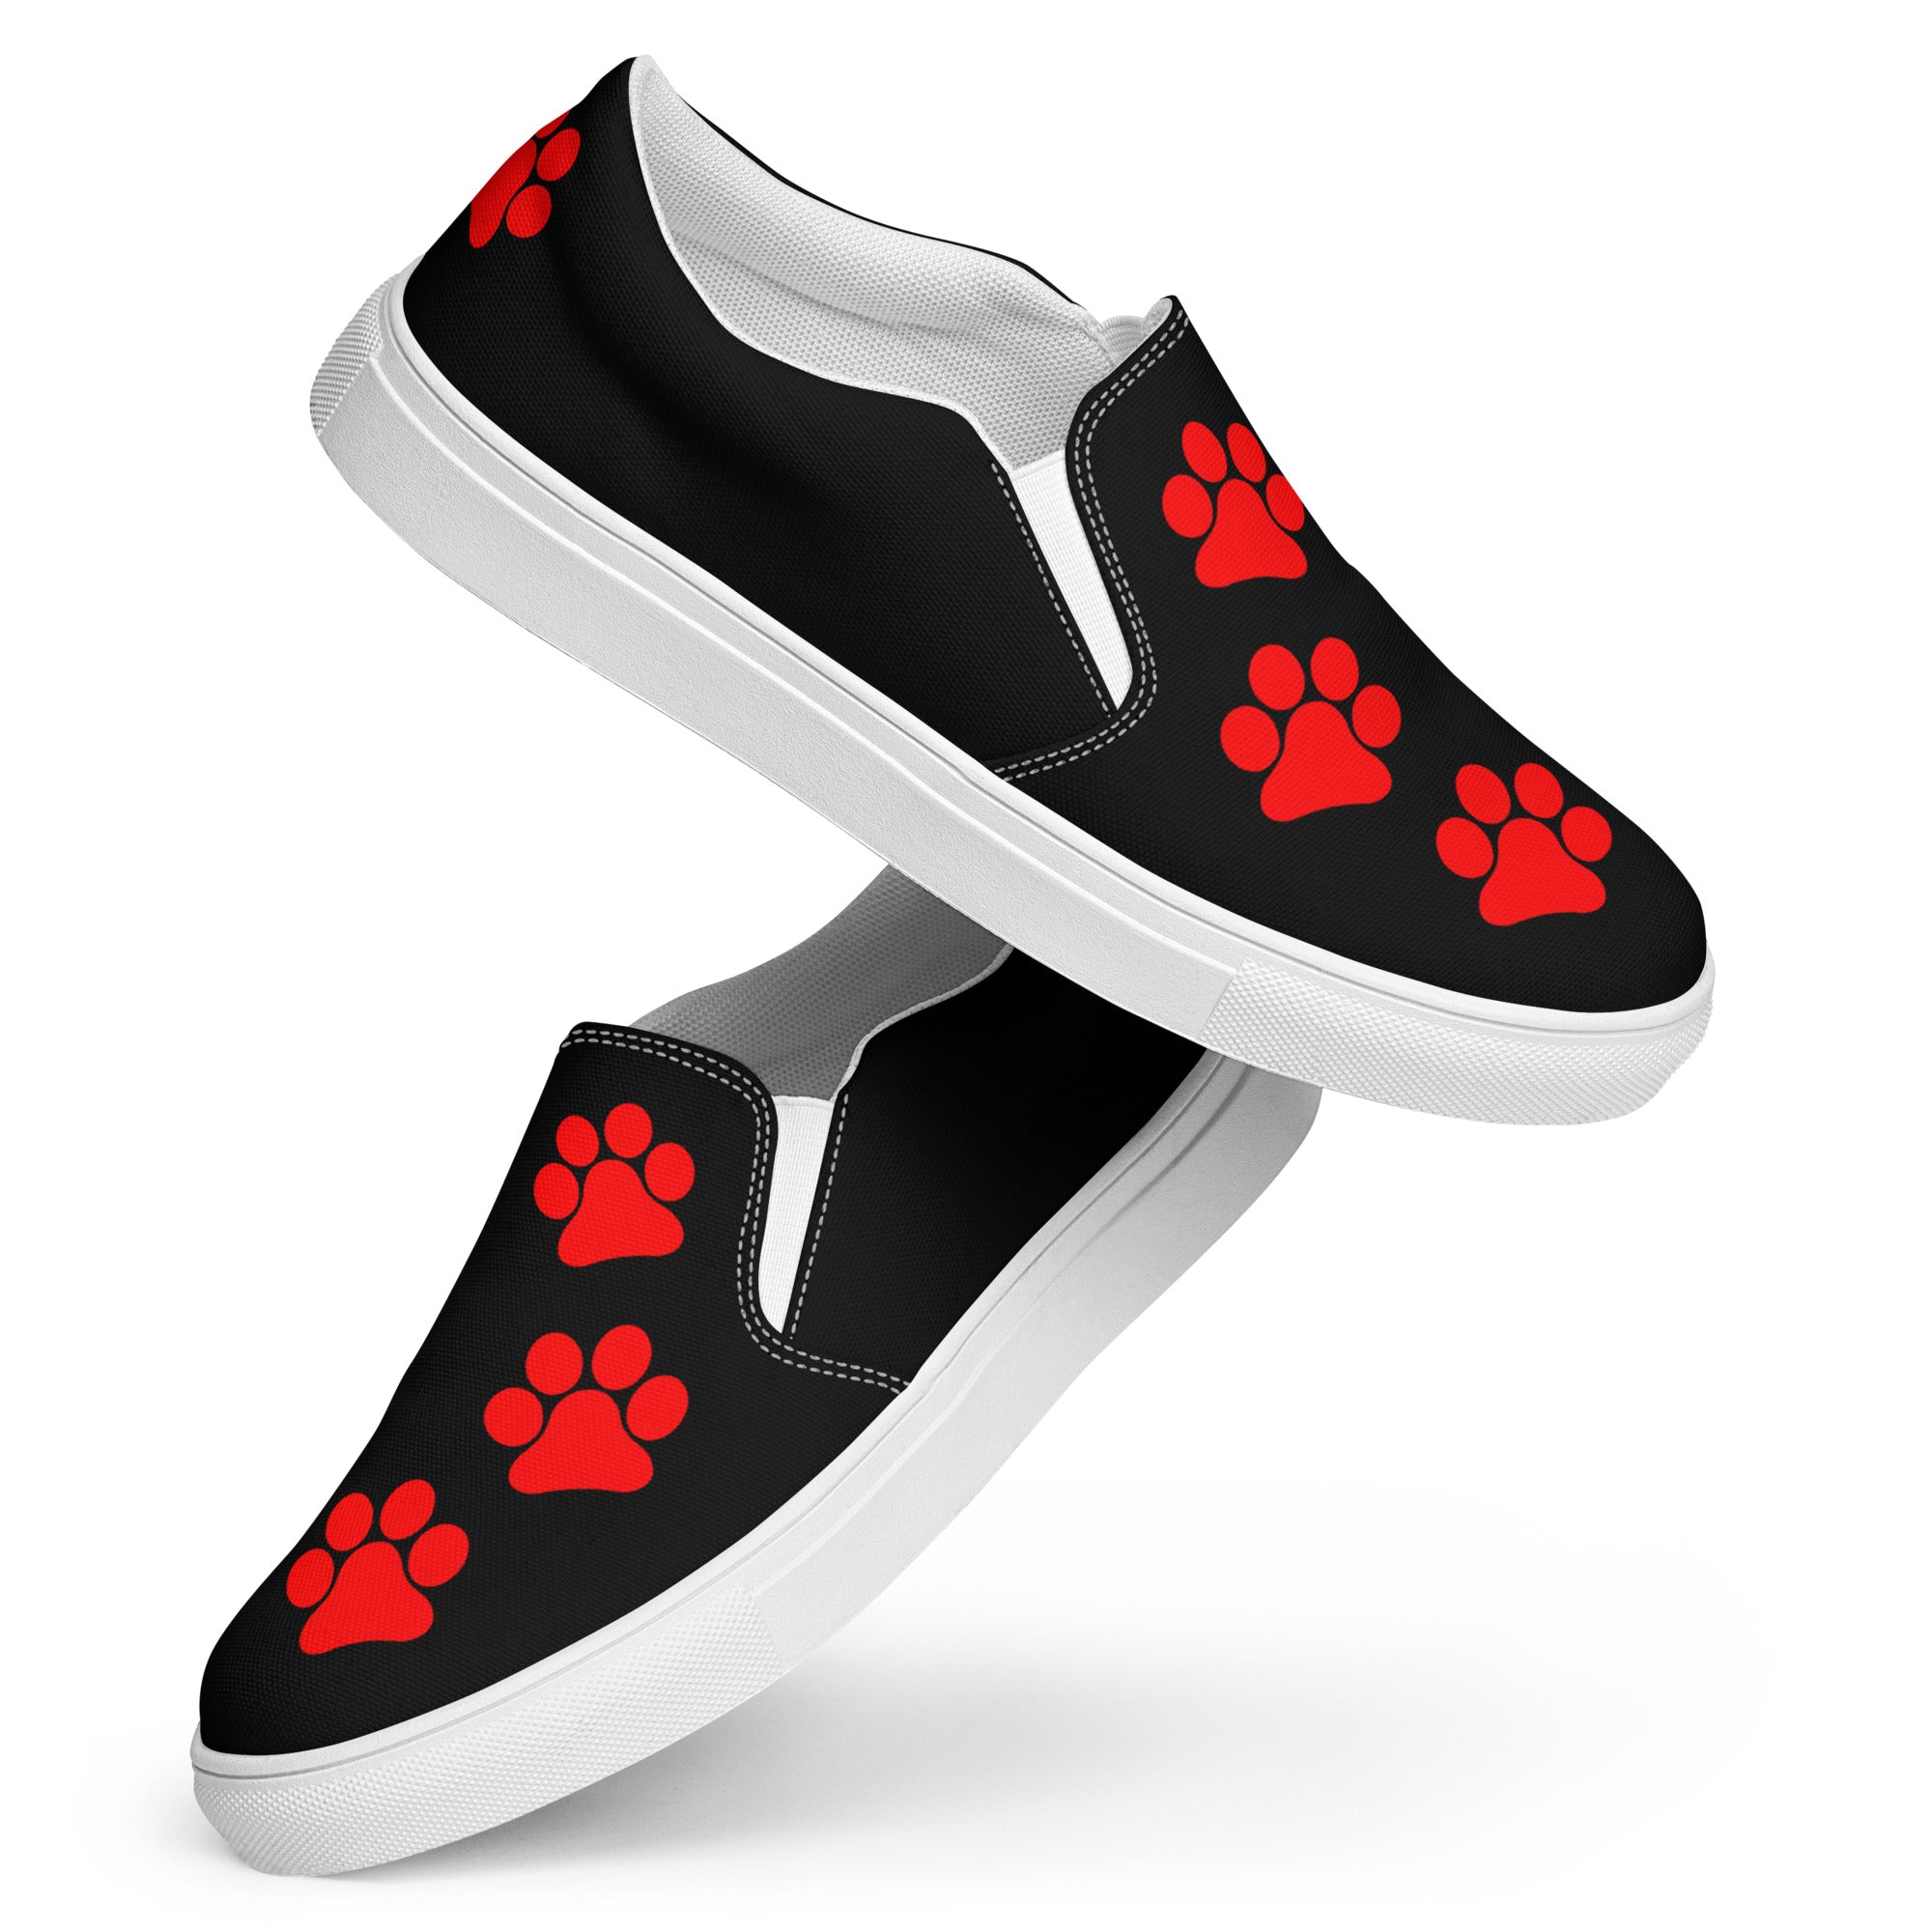 Men’s slip-on Black Red Paw shoes